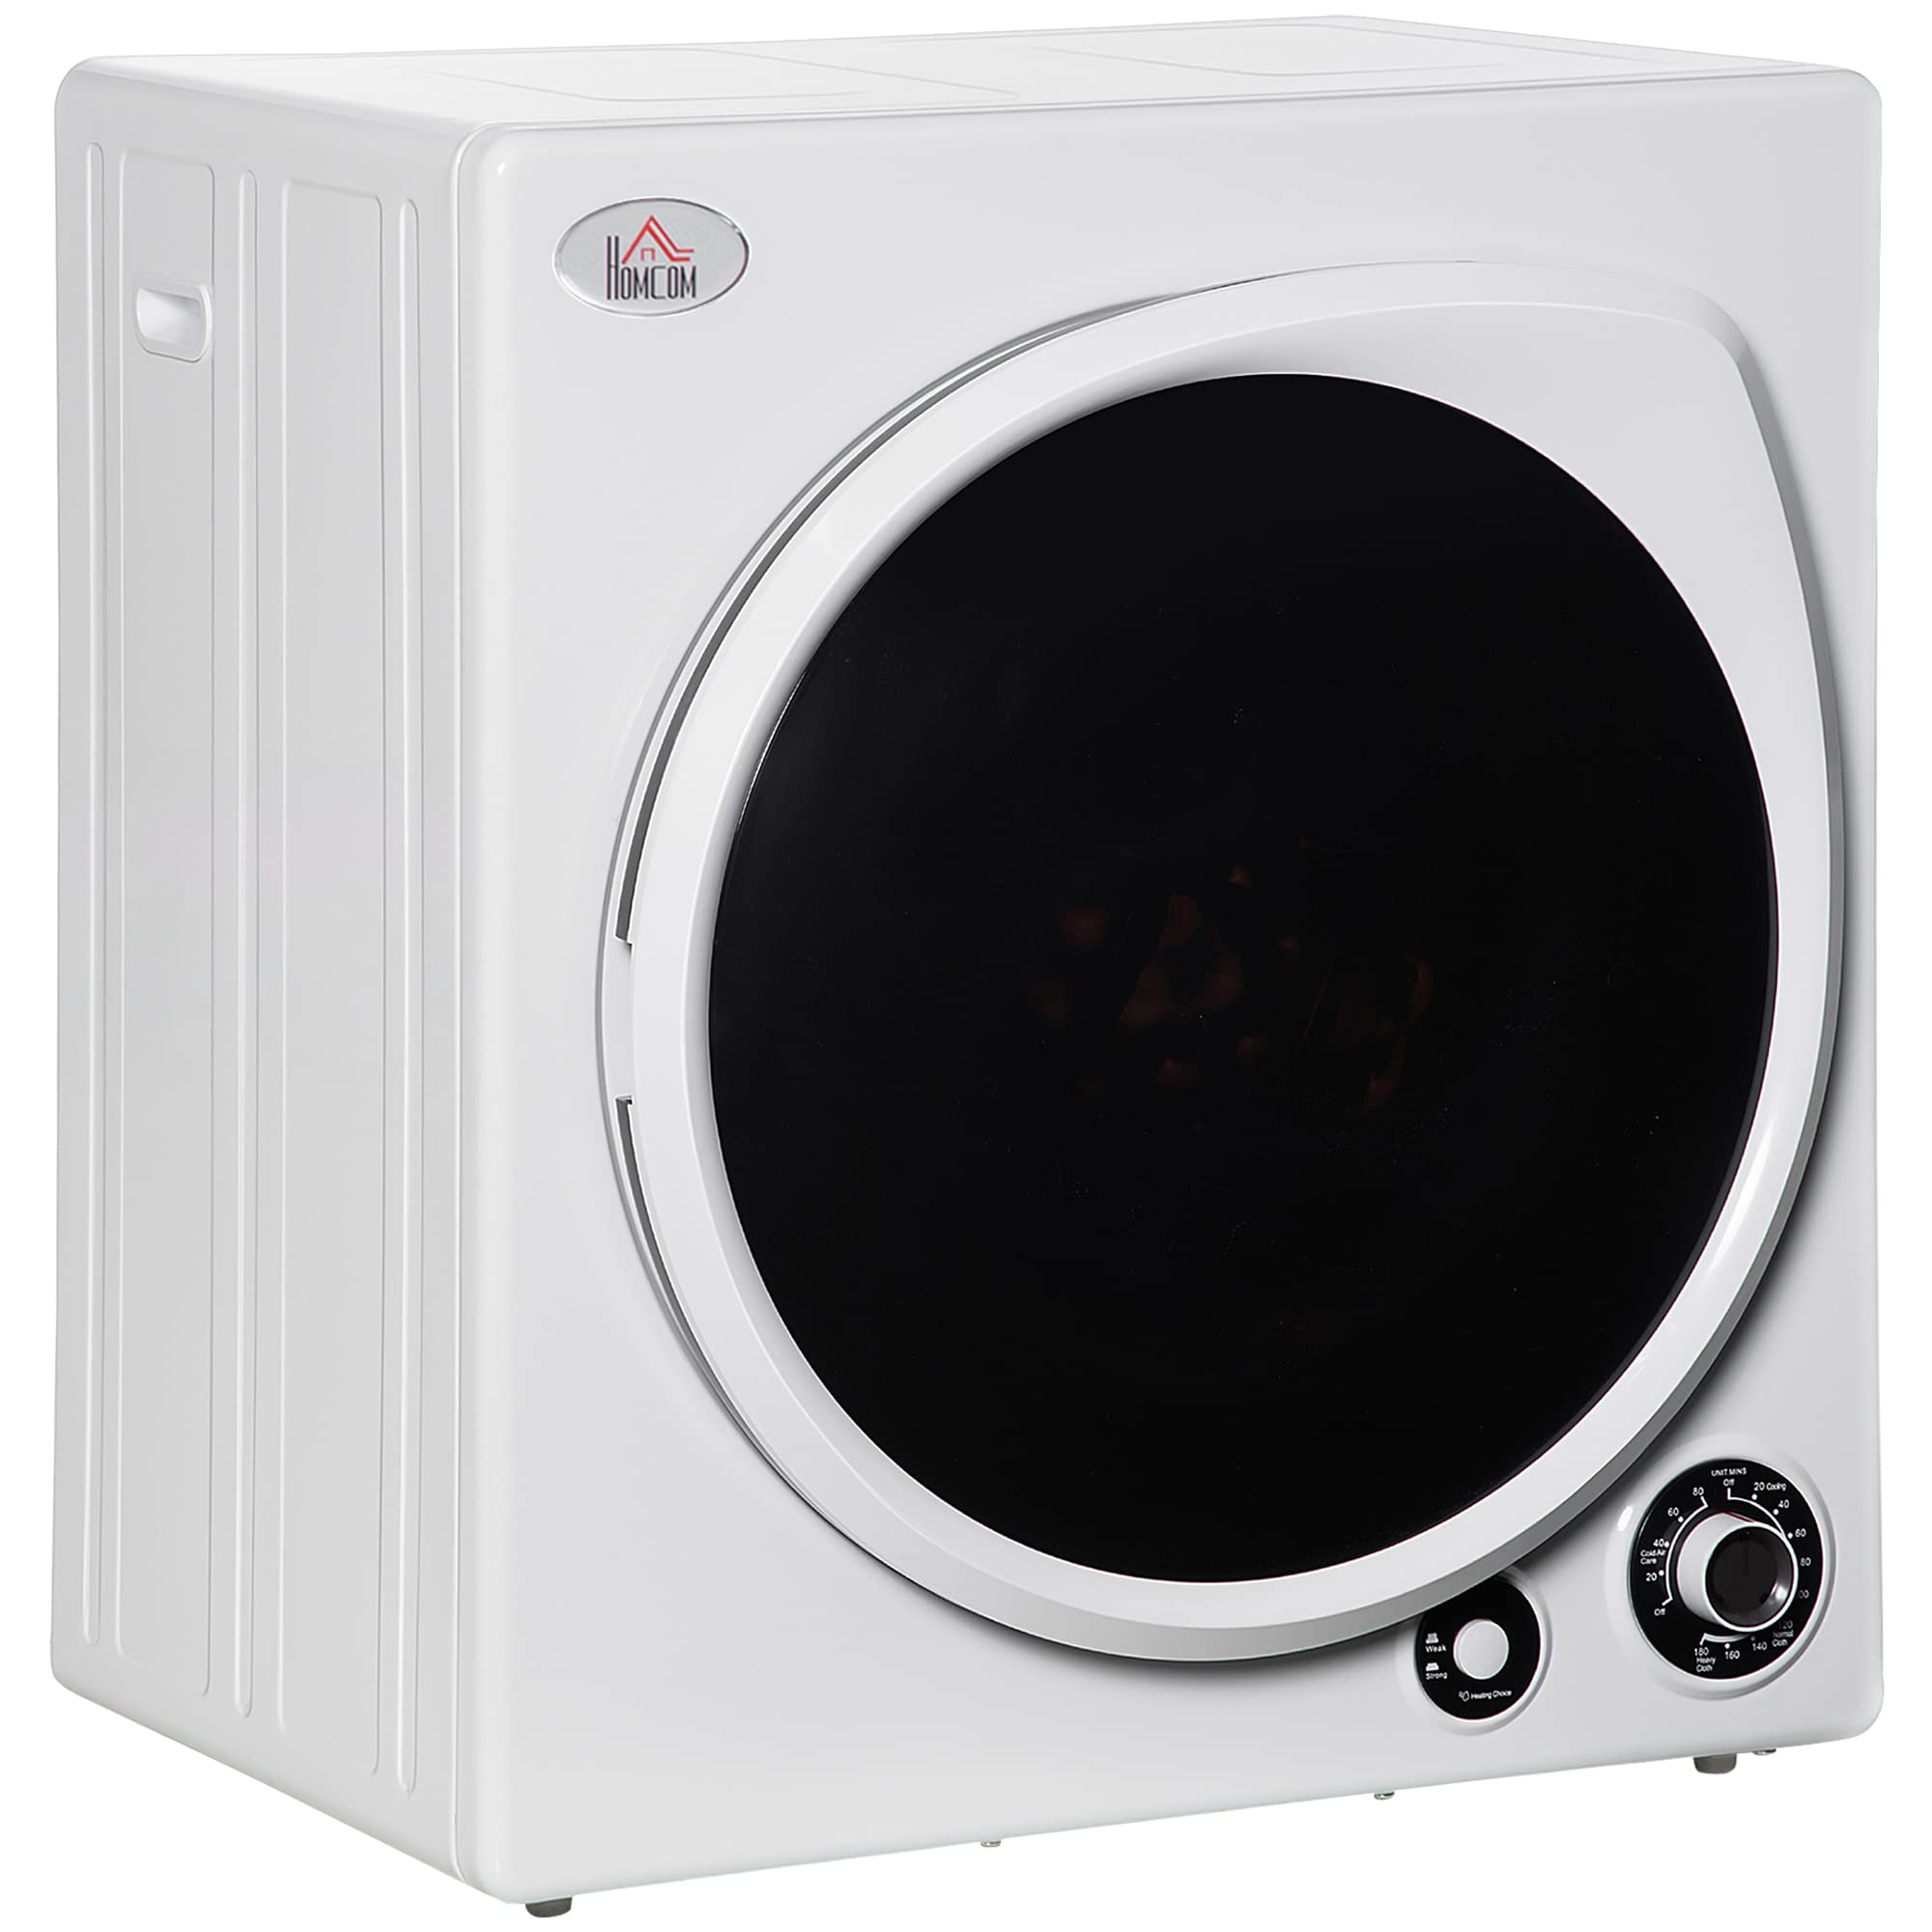 HomCom Automatic Dryer Machine, 1350W 3.22 Cu. Ft. Port...